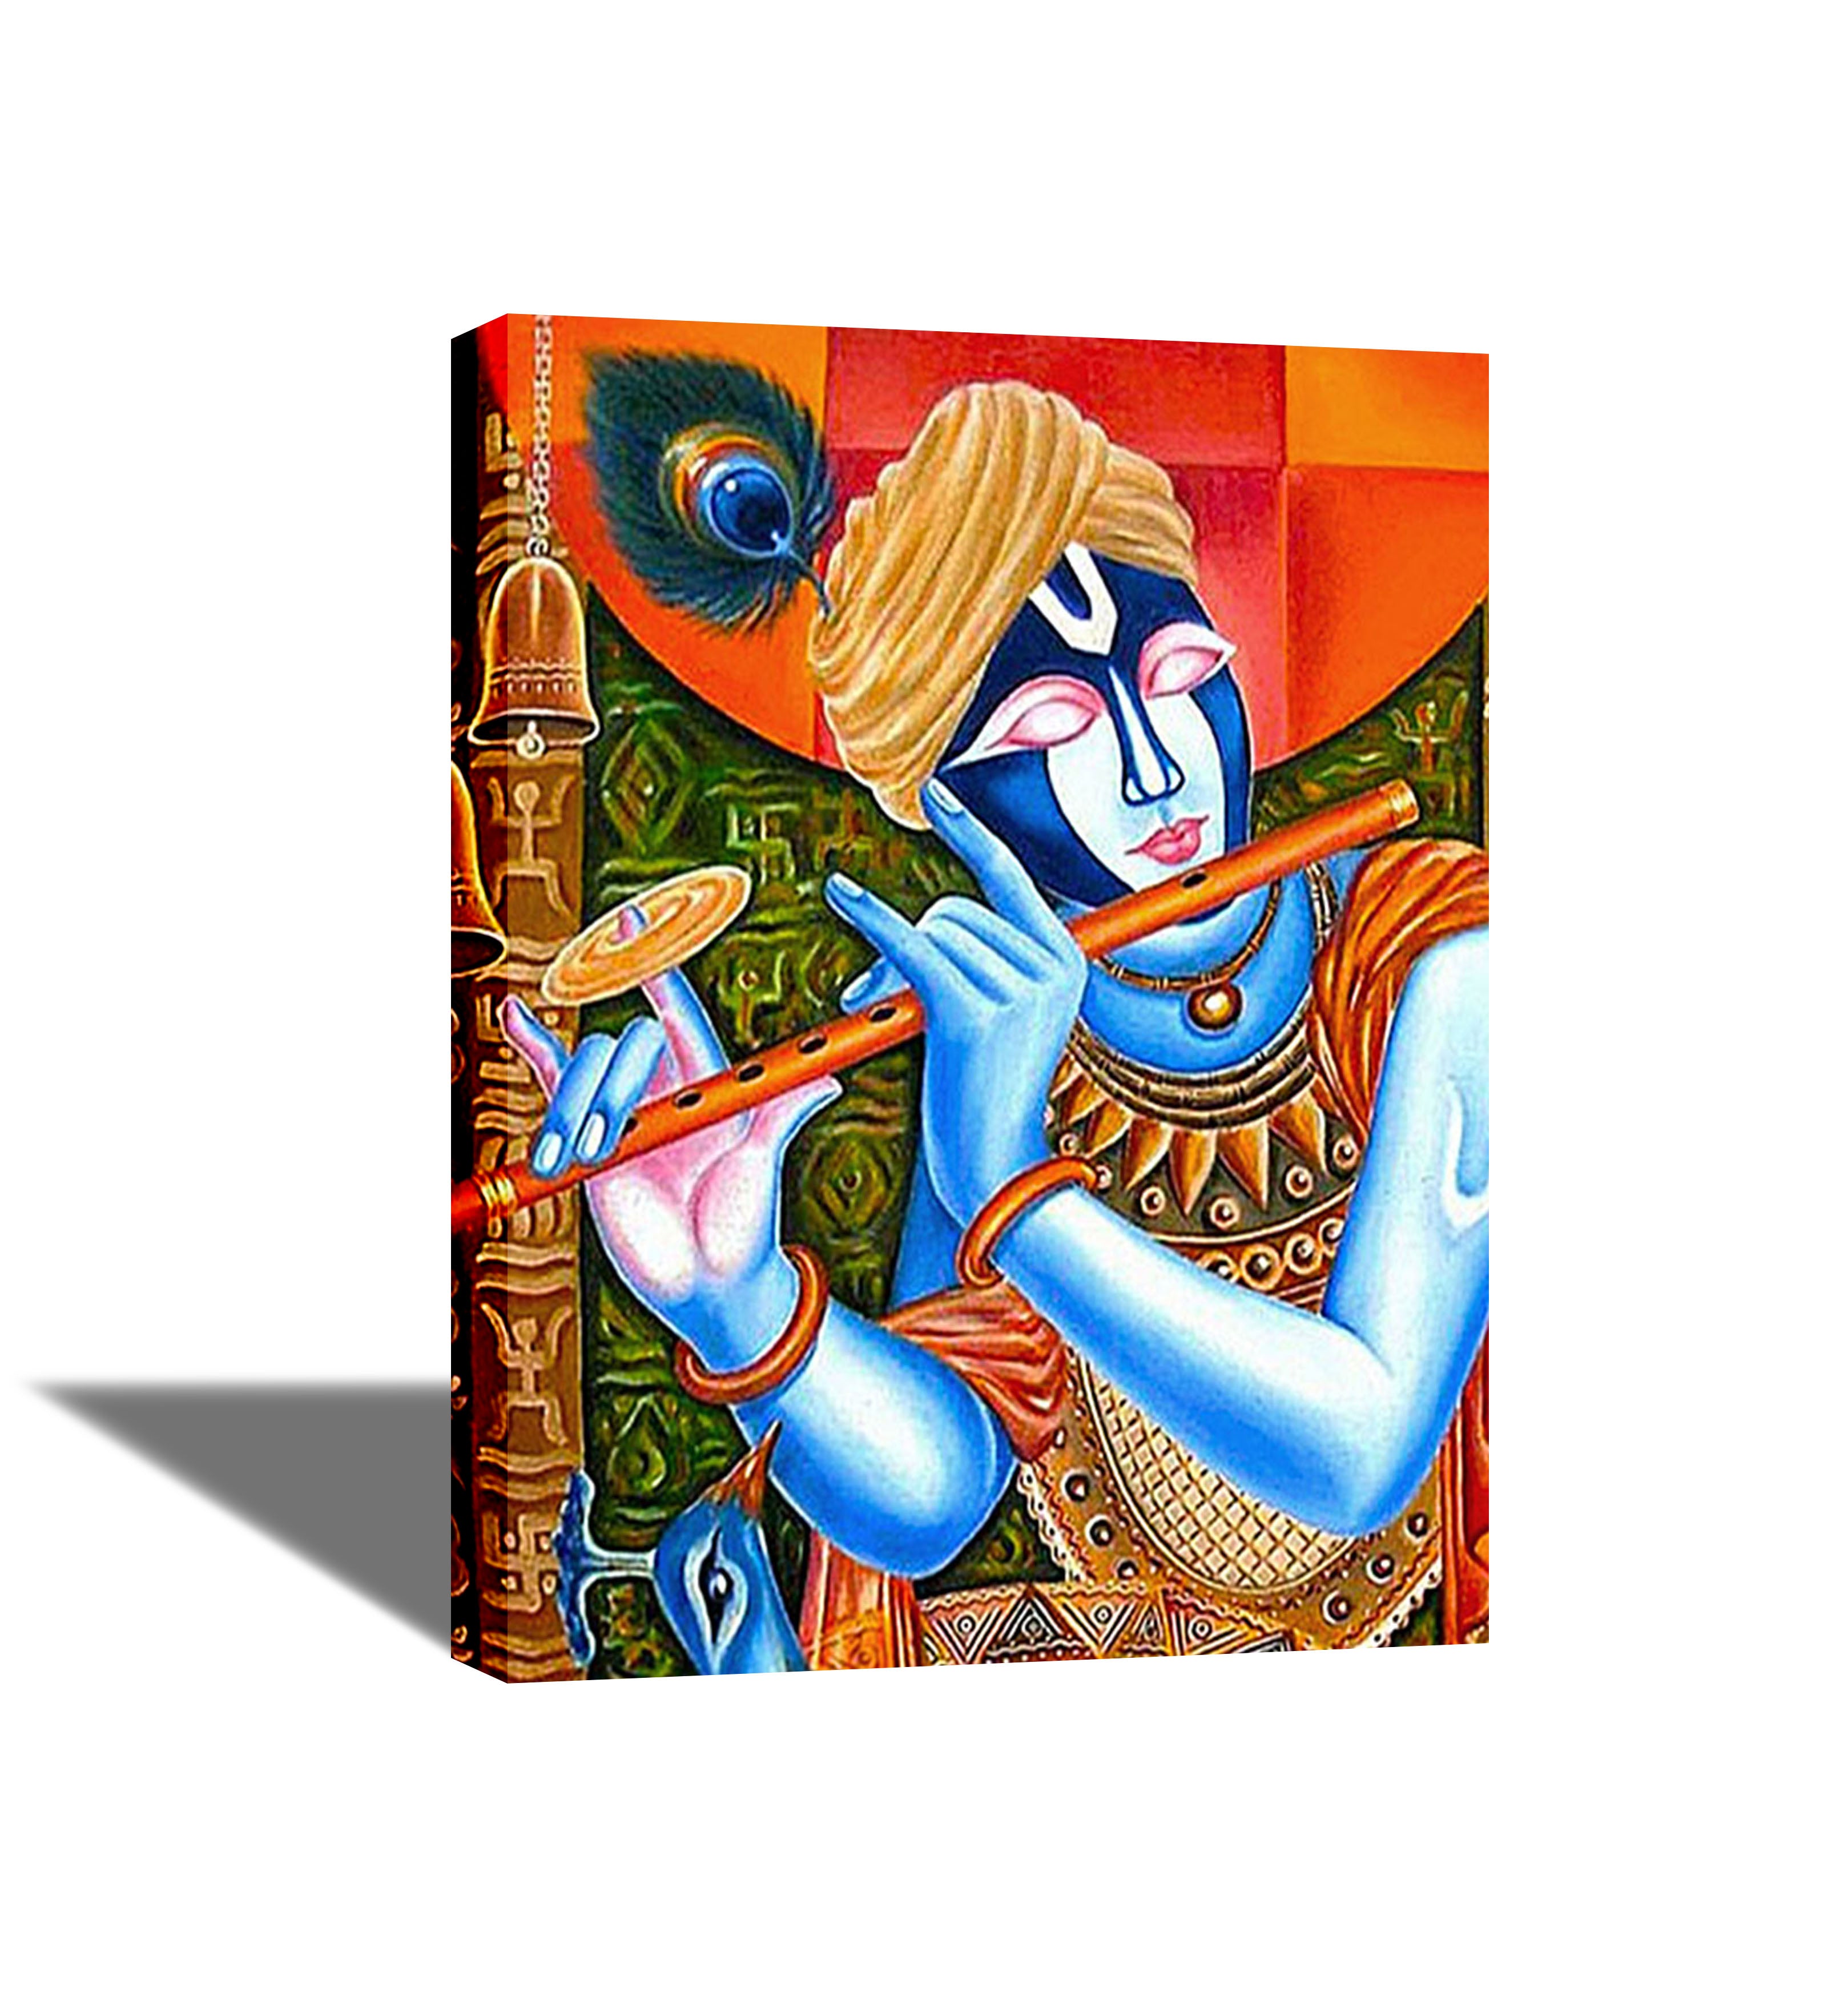 Jai Sri Krishna